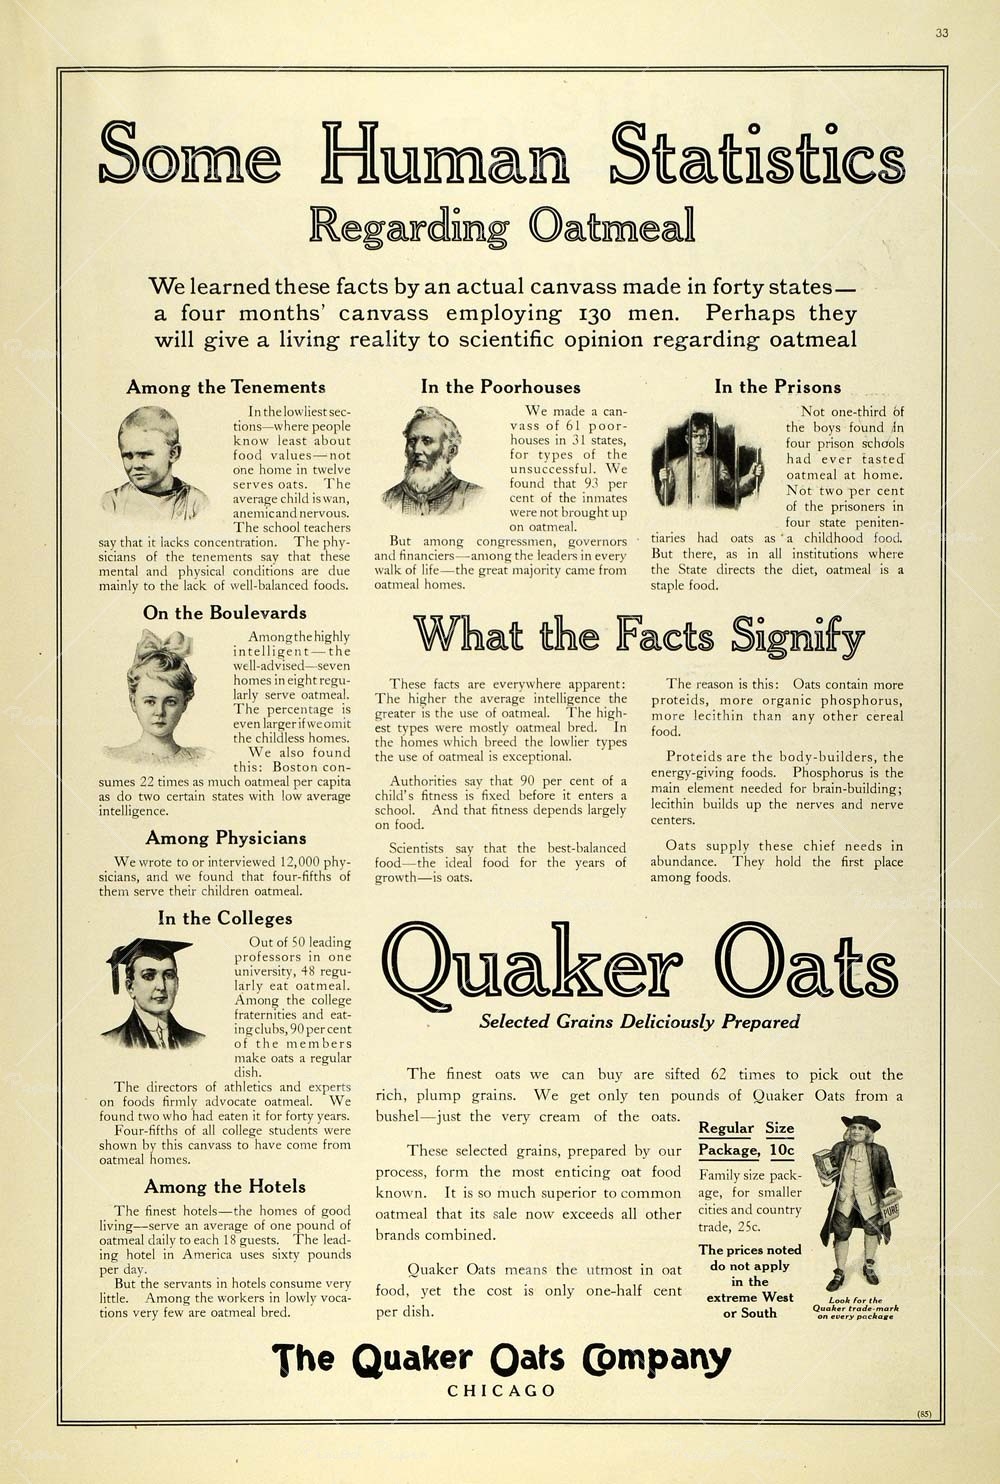 quaker oats advertisement